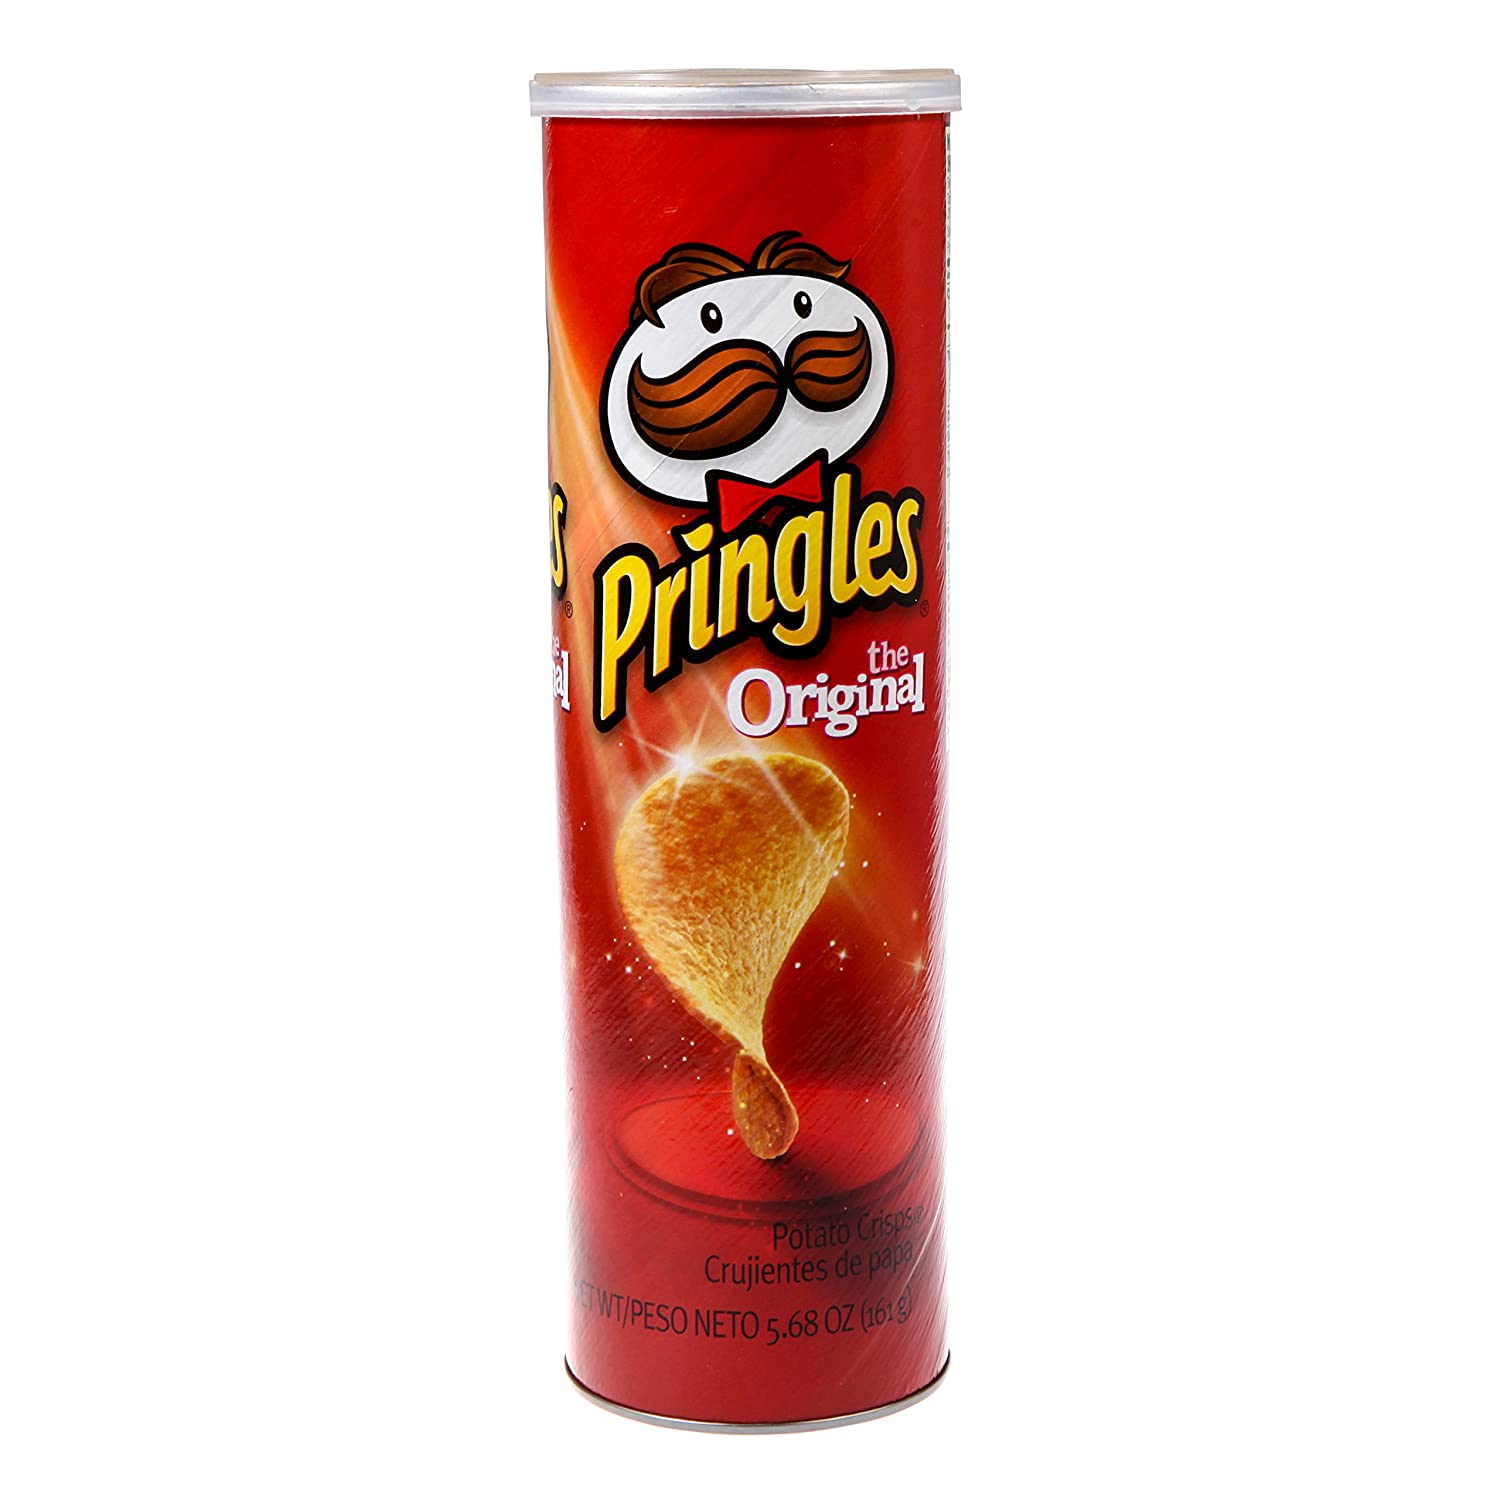 Pringles Original 5.68oz / 5.96oz - Jollys Pharmacy Online Store